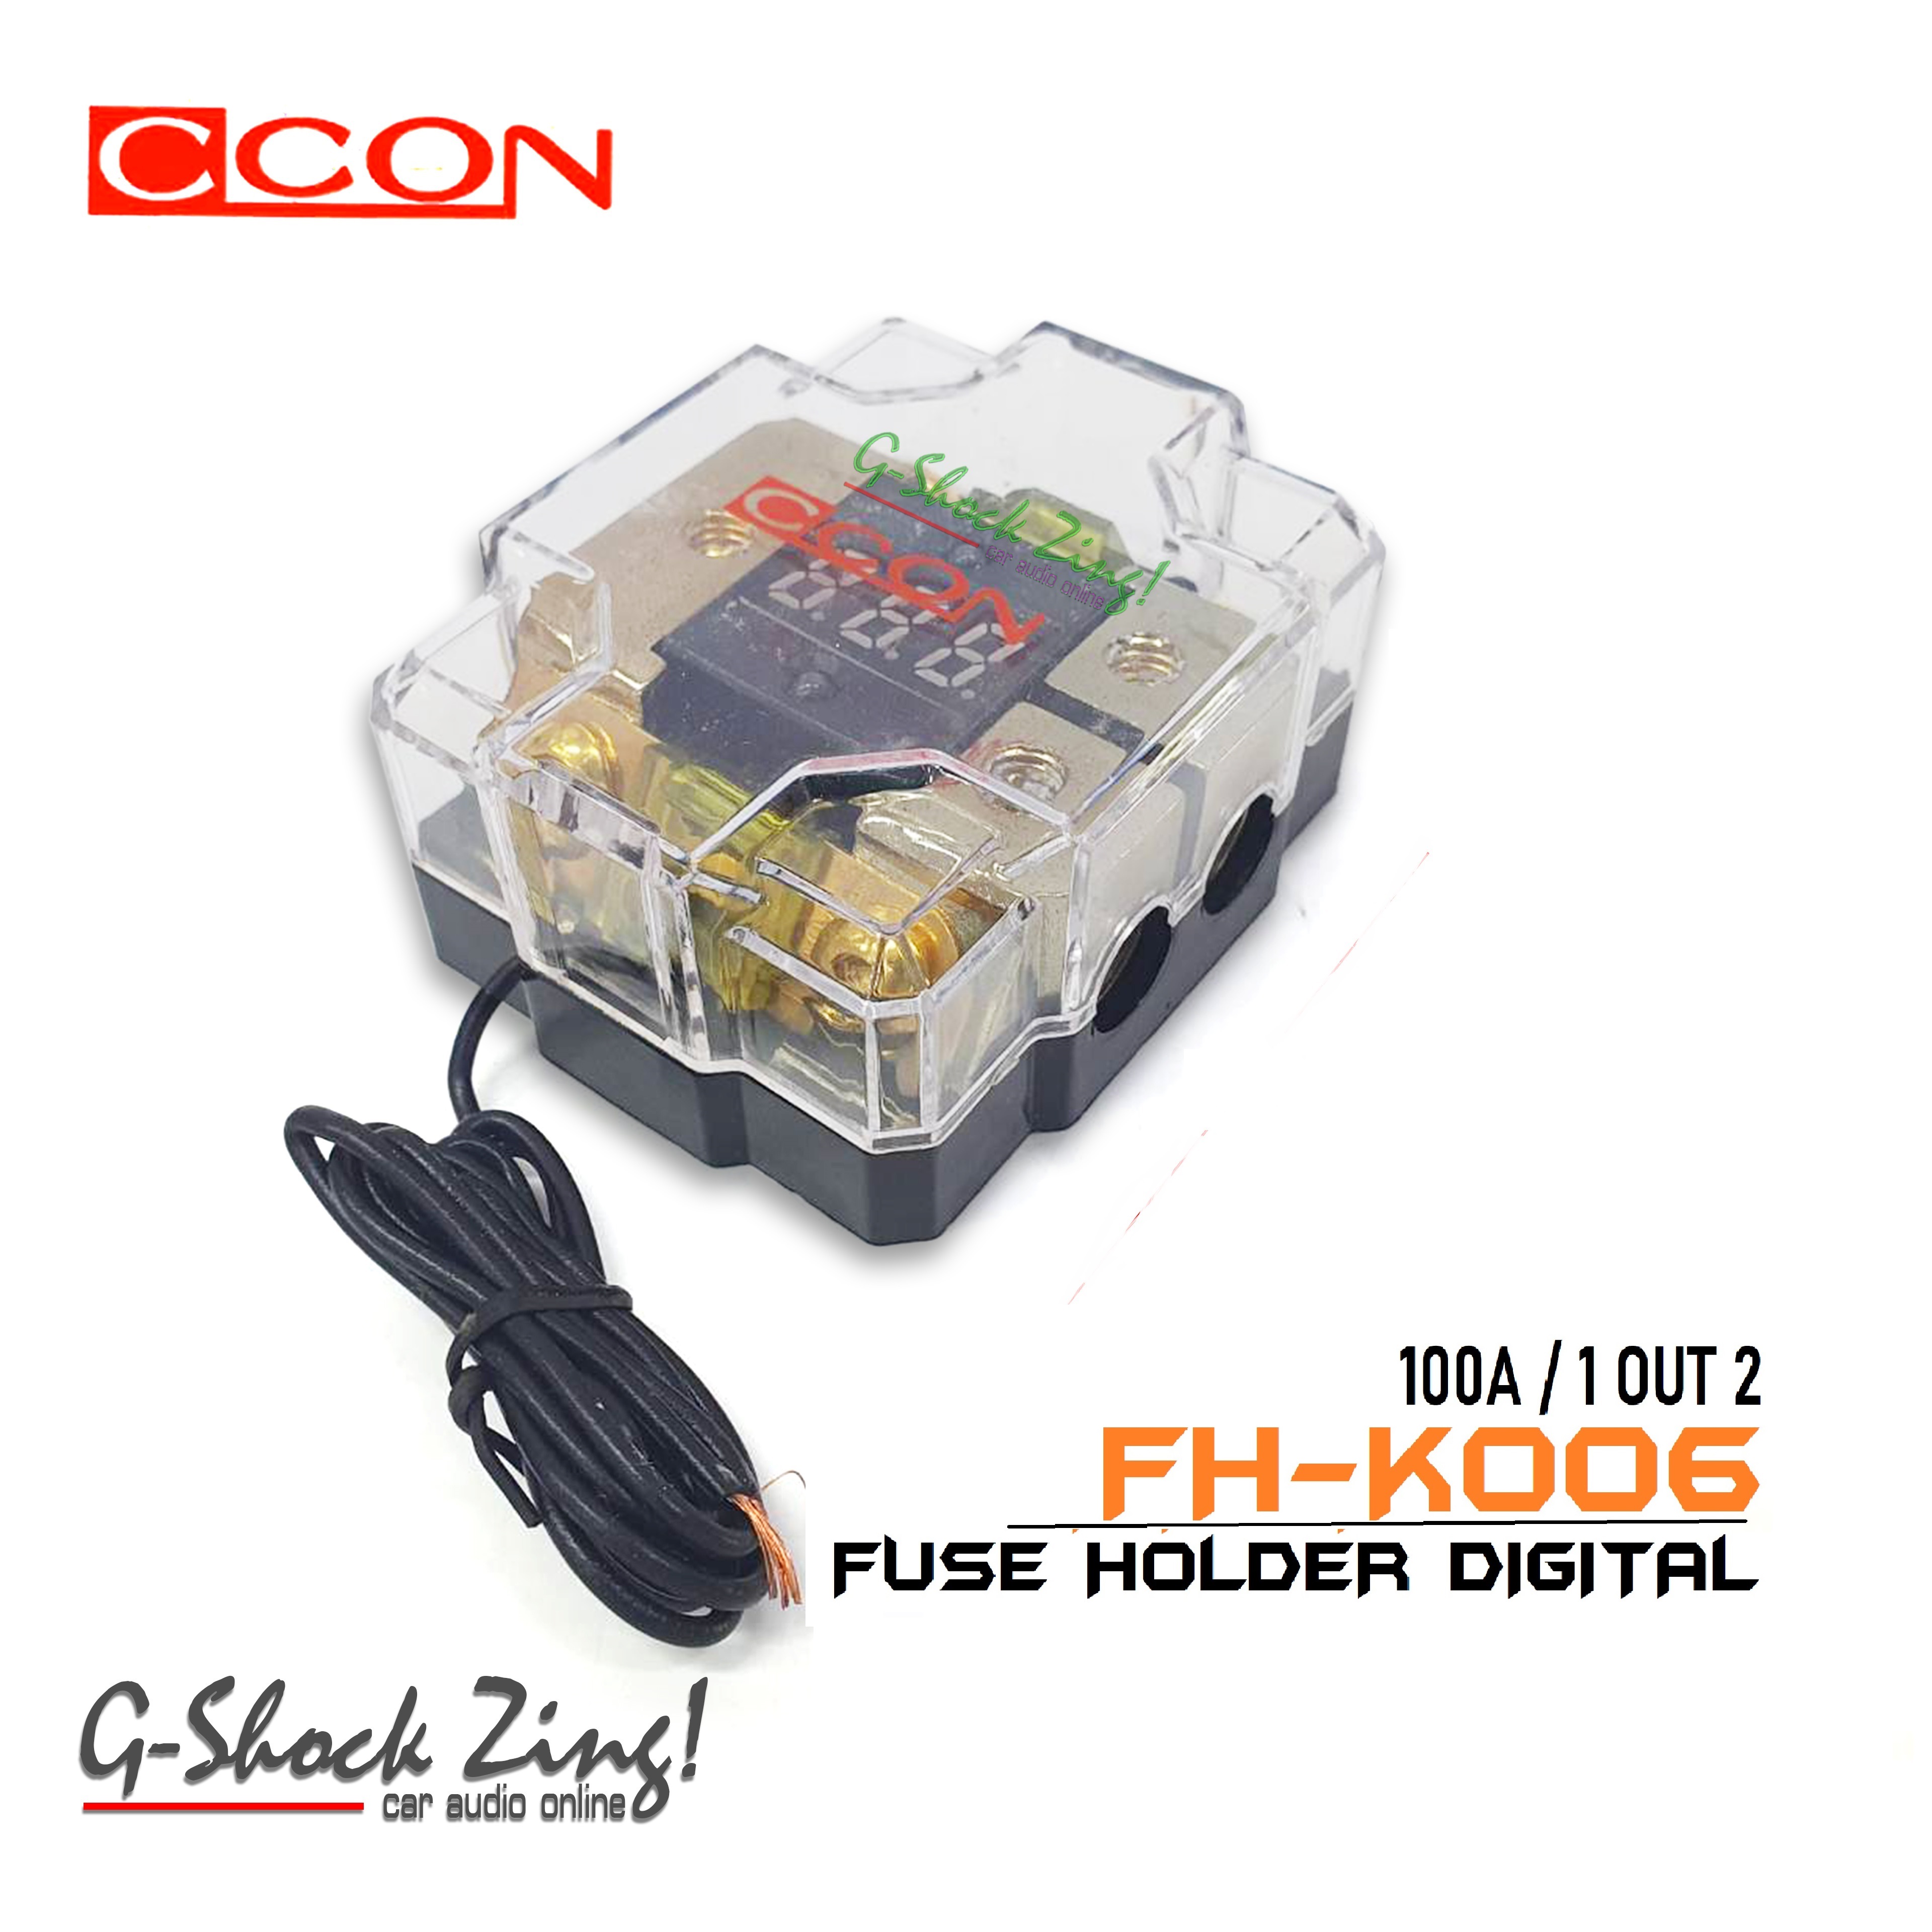 CCON Fuse Holder DIGITAL LED Voltage Display ฟิวส์รถยนต์ เครื่องเสียงรถยนต์ กล่องฟิวส์ แบบ 1ทาง ออก 2 จอขนาด100A/แอมป์ มีจอแสดงผล Voltage CCON รุ่น FH-K006